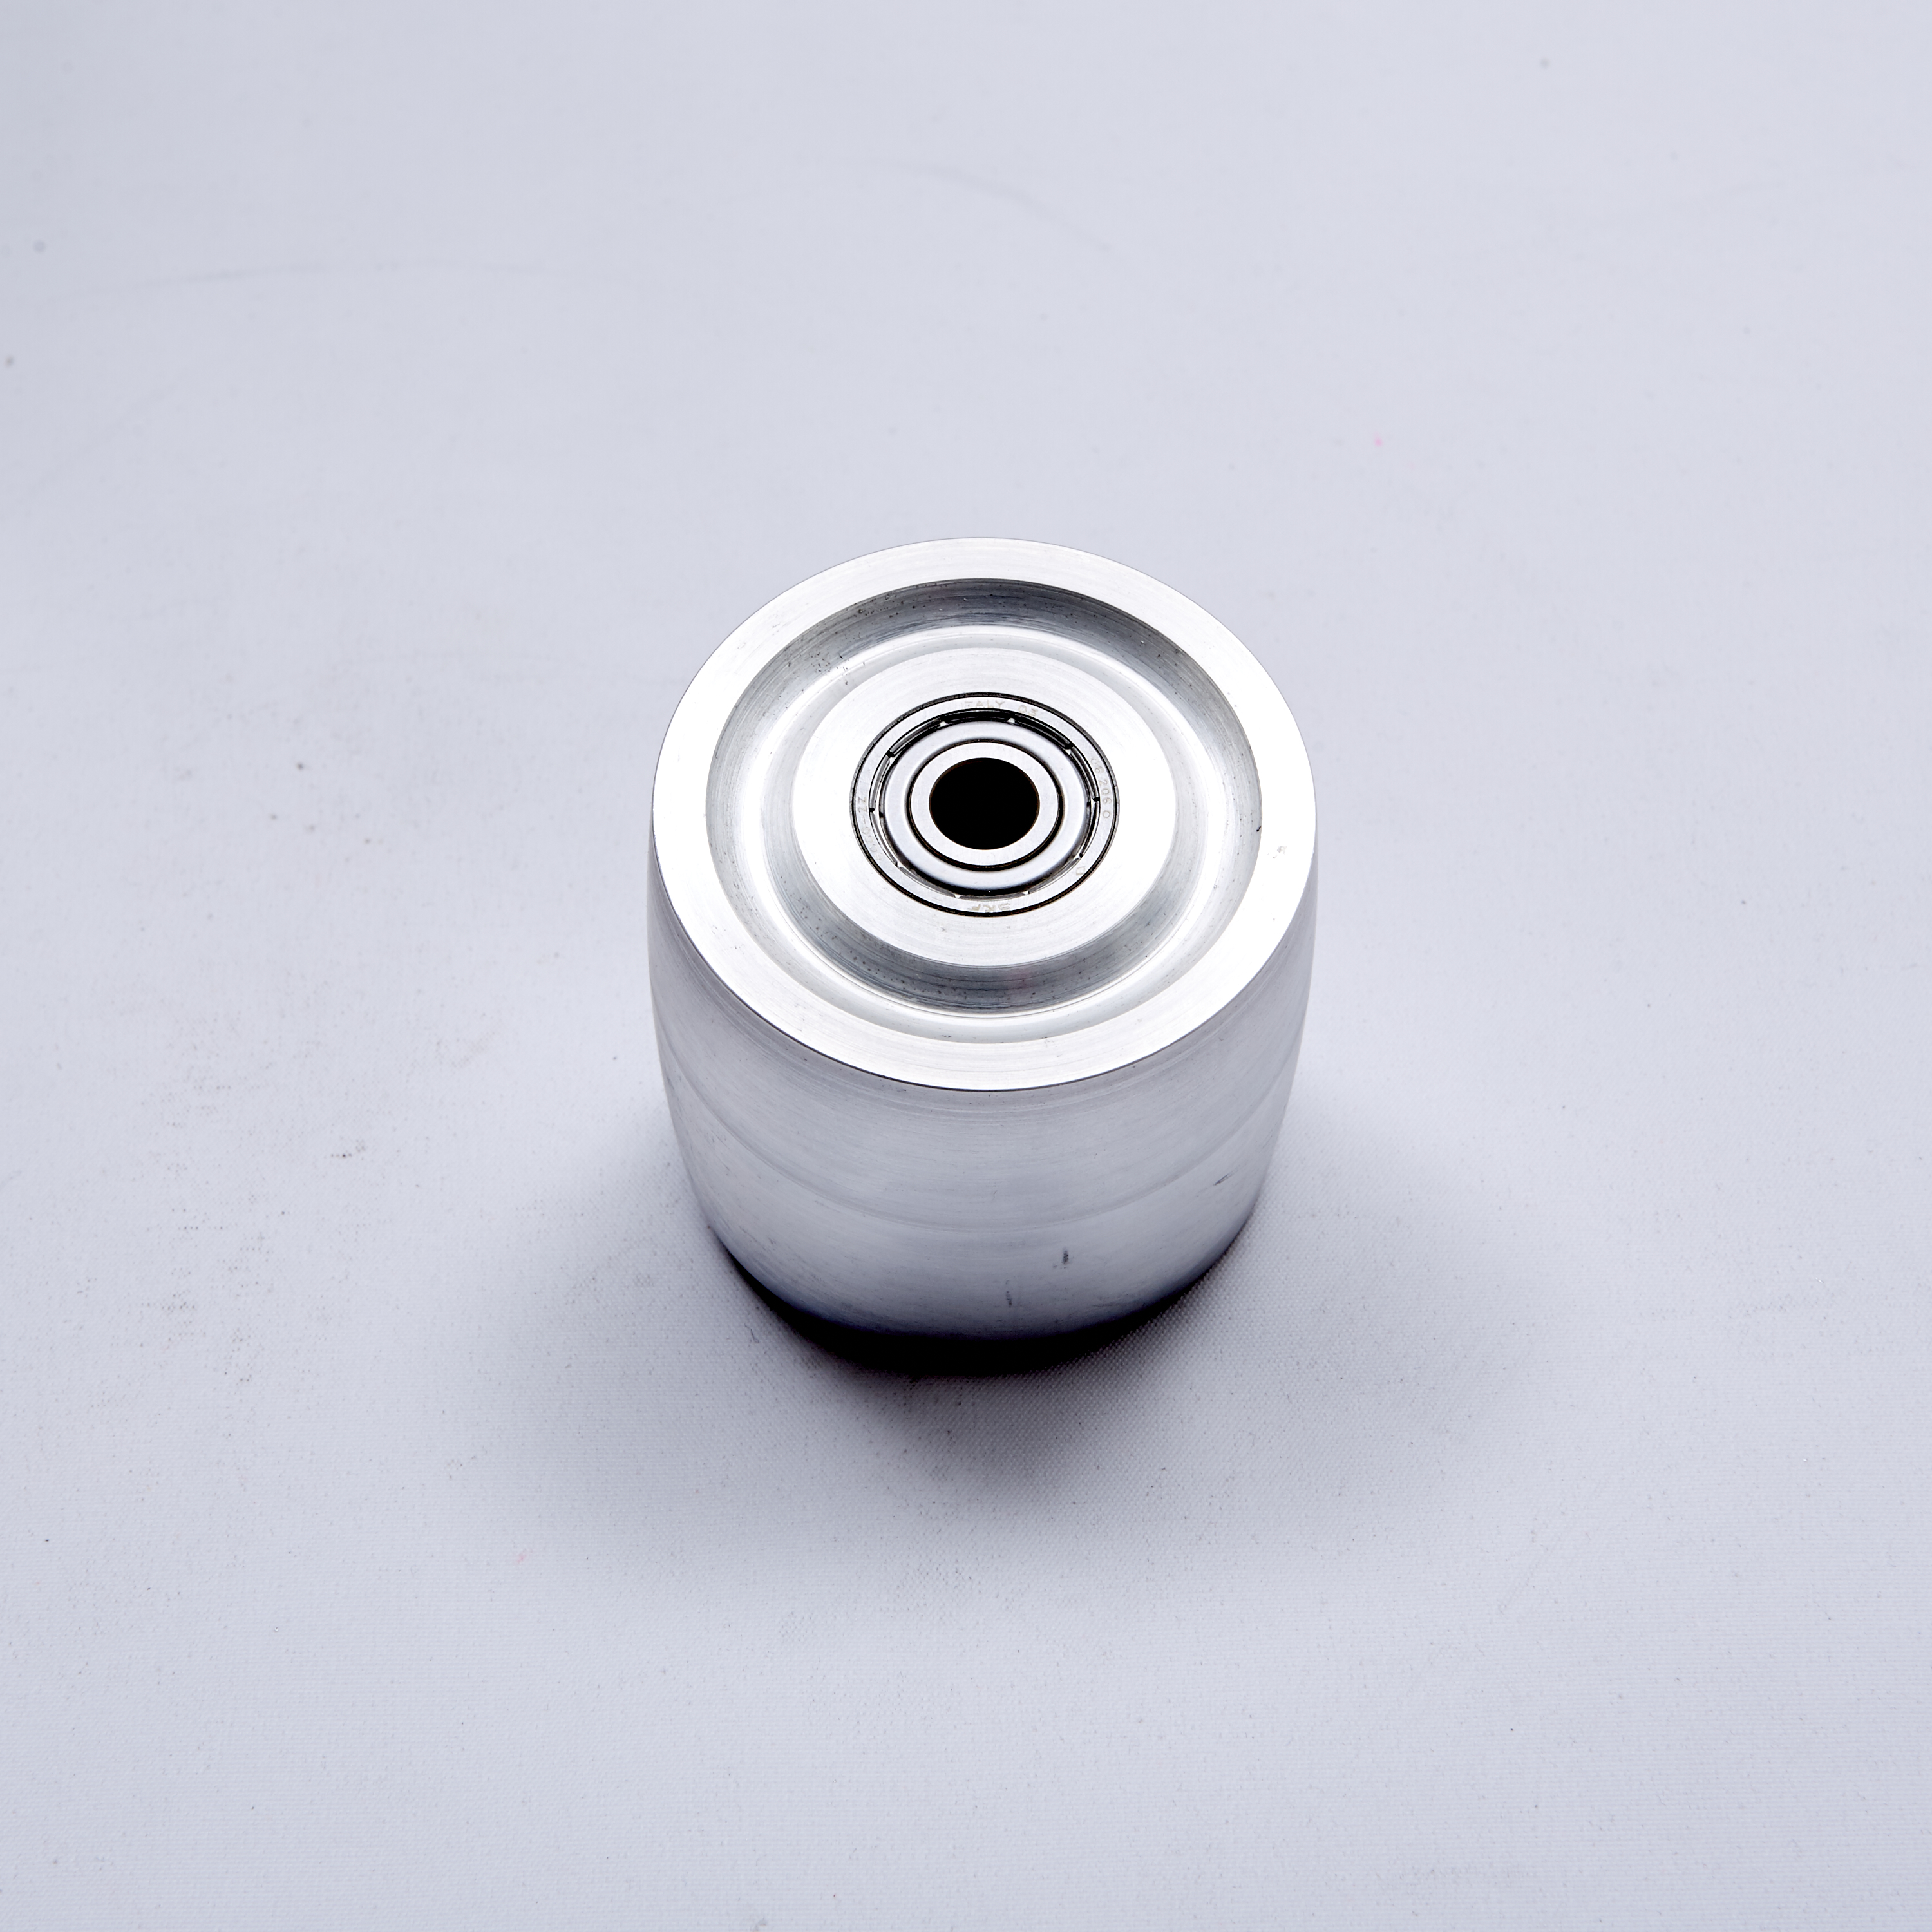 Belt grinder with wheels SUPPORT 4 PCS CYLINDER 19mm 1 pcs 50x130mm drive wheeel 1 pcs 50x70 mm Tracking whell 2 pcs 50x50mm